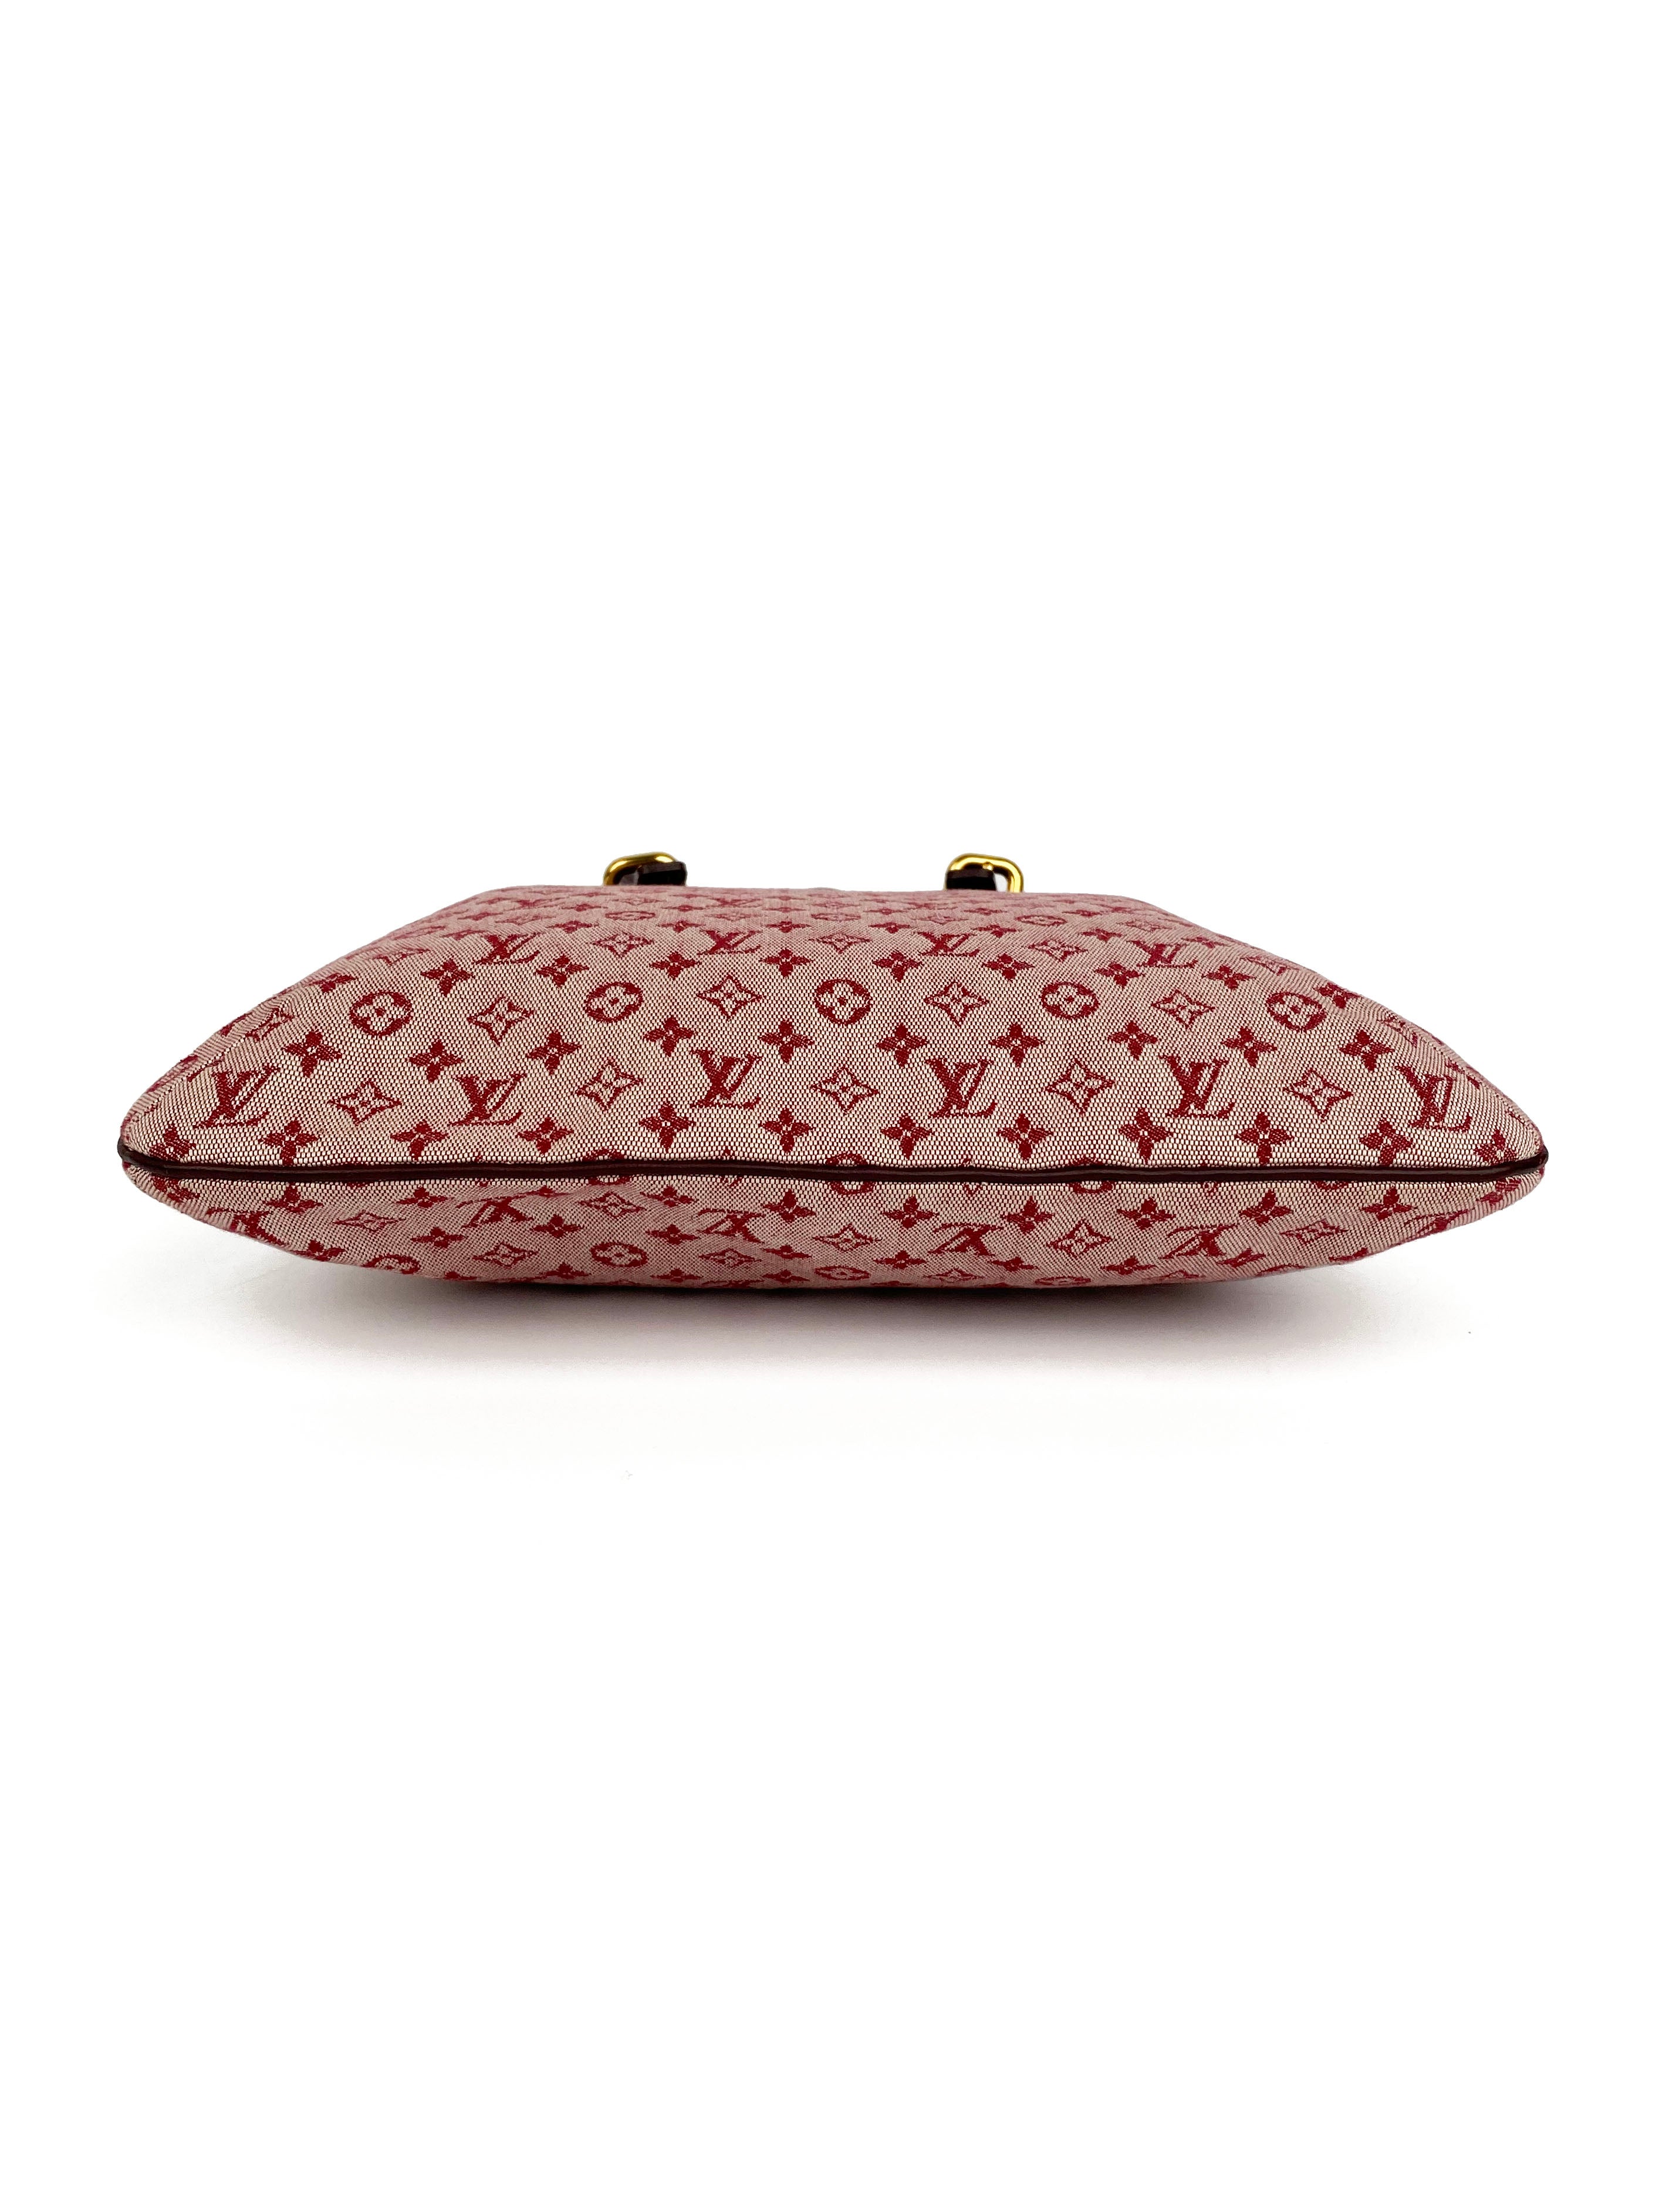 Louis Vuitton Vintage Pink Denim Tote Bag